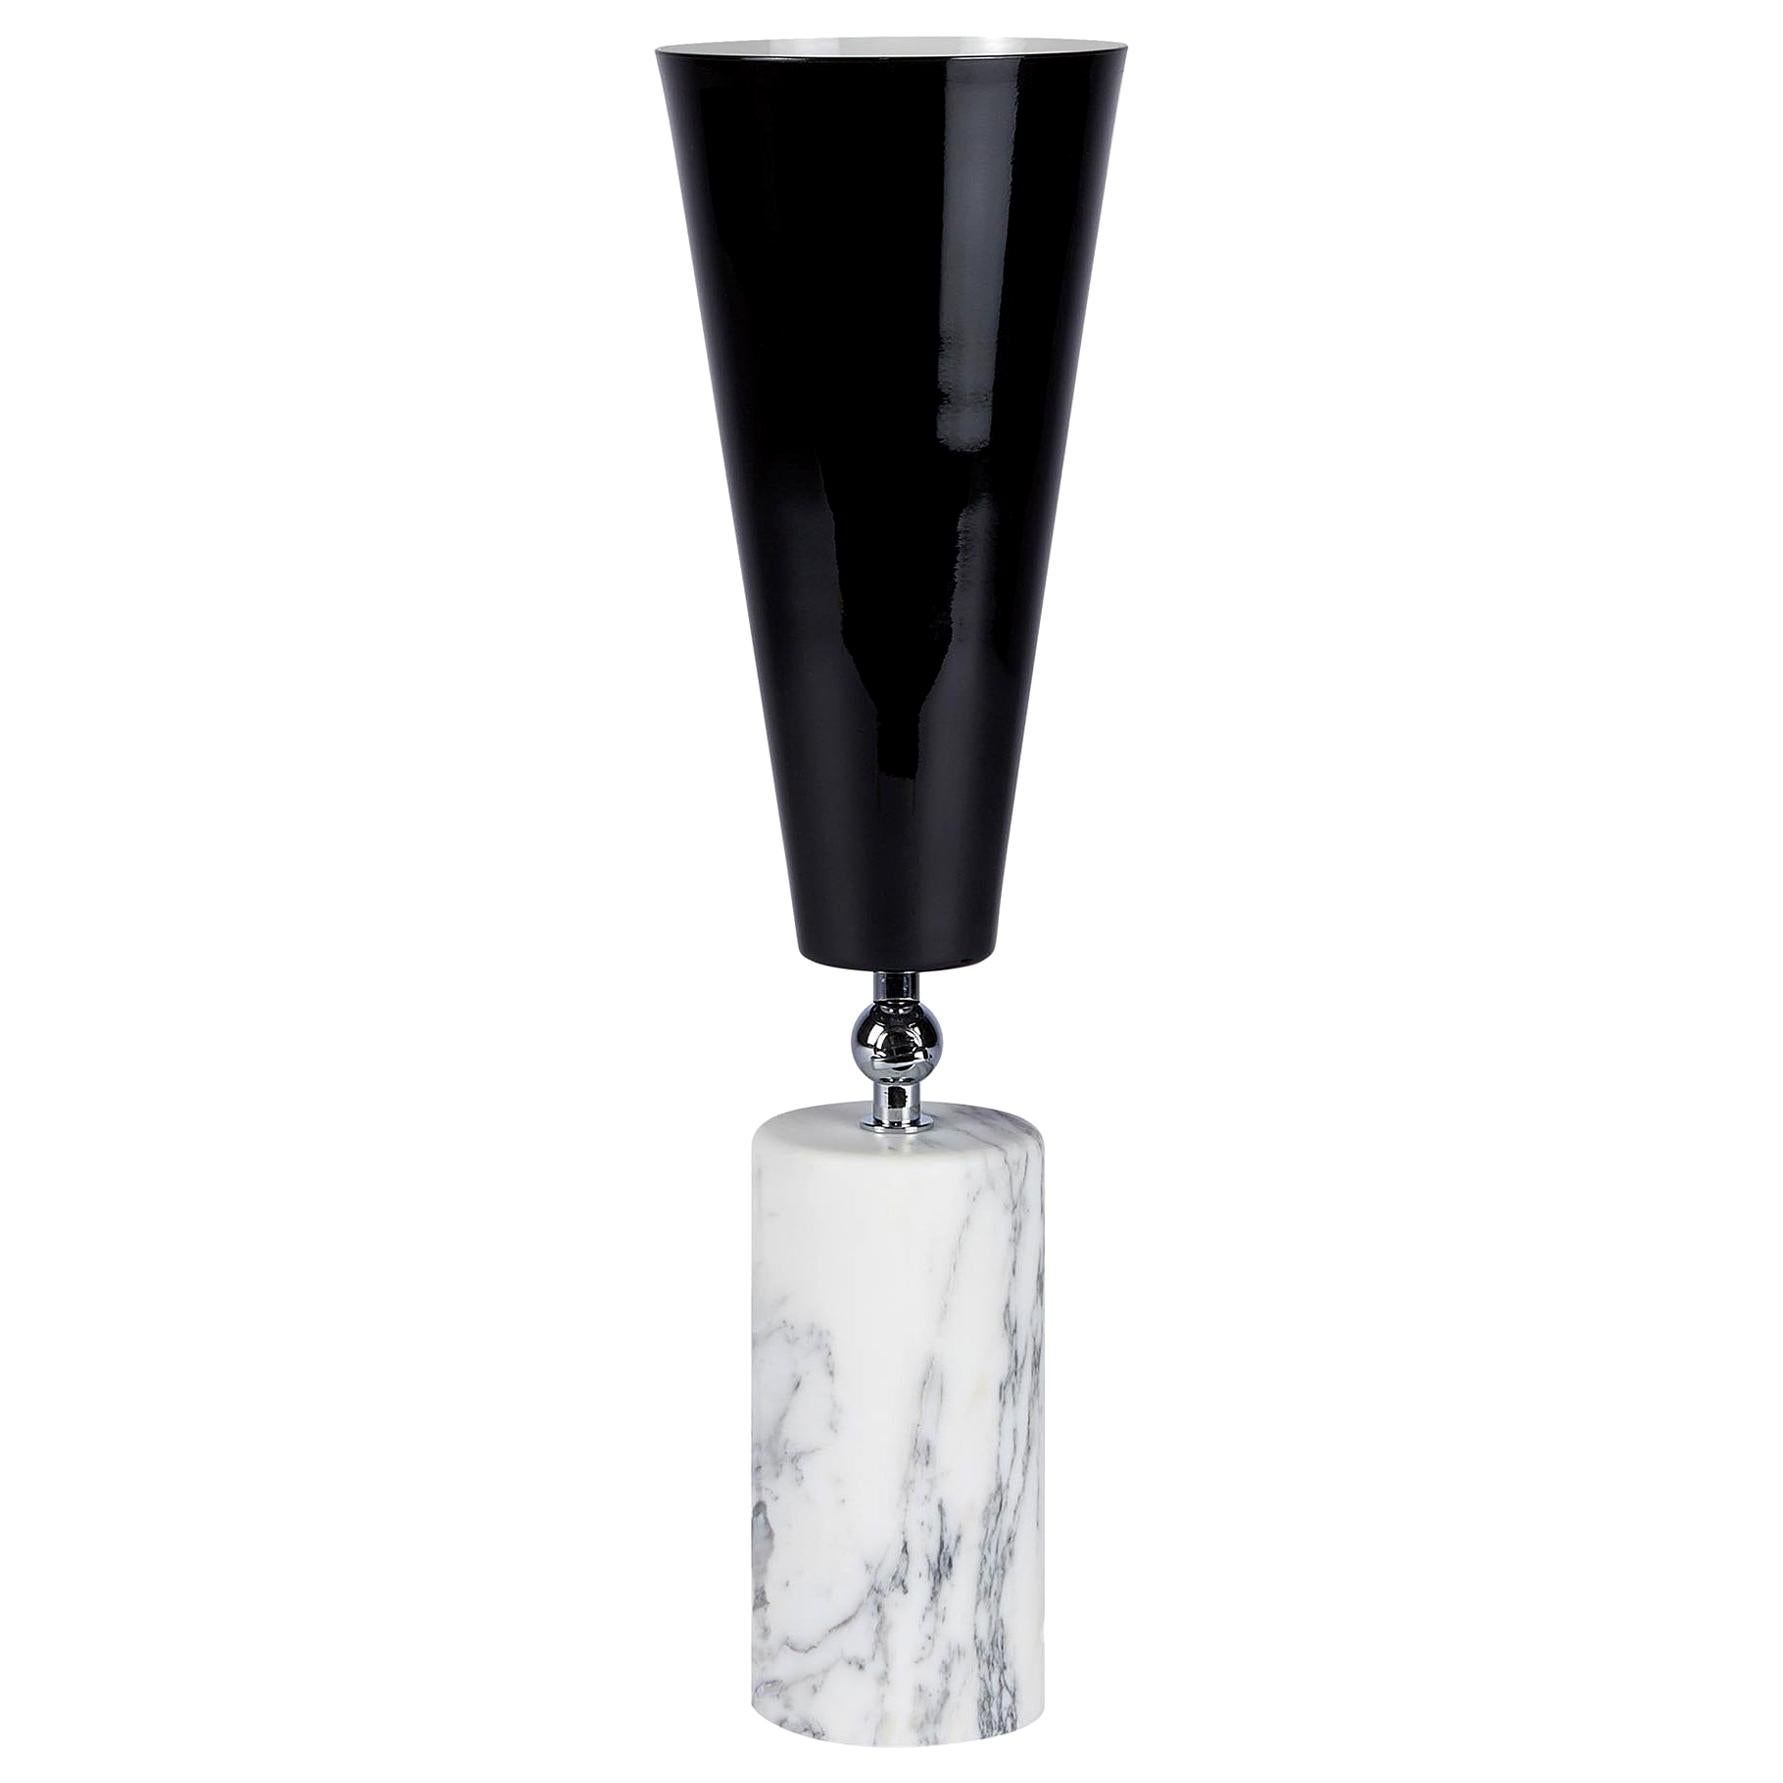 Tato Italia 'Vox' Table Lamp in White Carrara Marble, Chrome, and Glossy Black For Sale